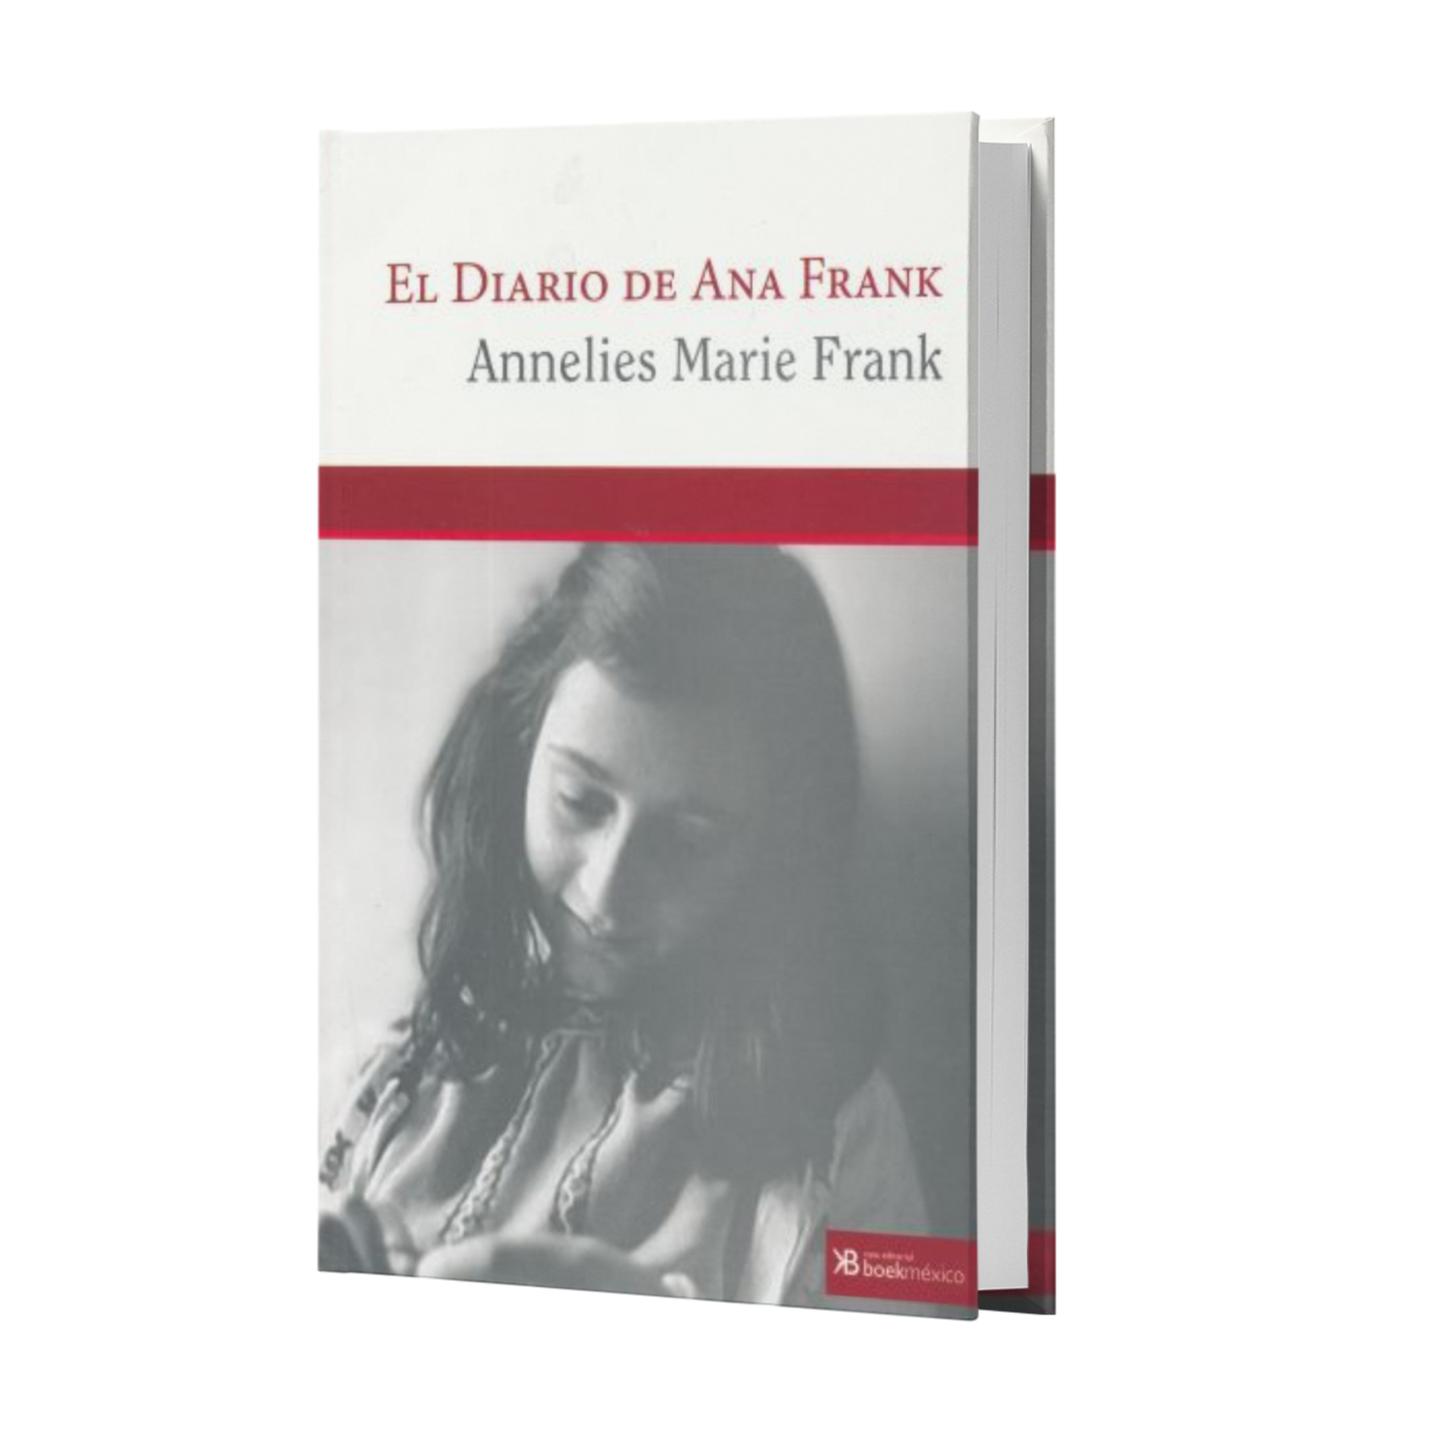 El Diario De Ana Frank - Ana Frank (Annelies Marie Frank)